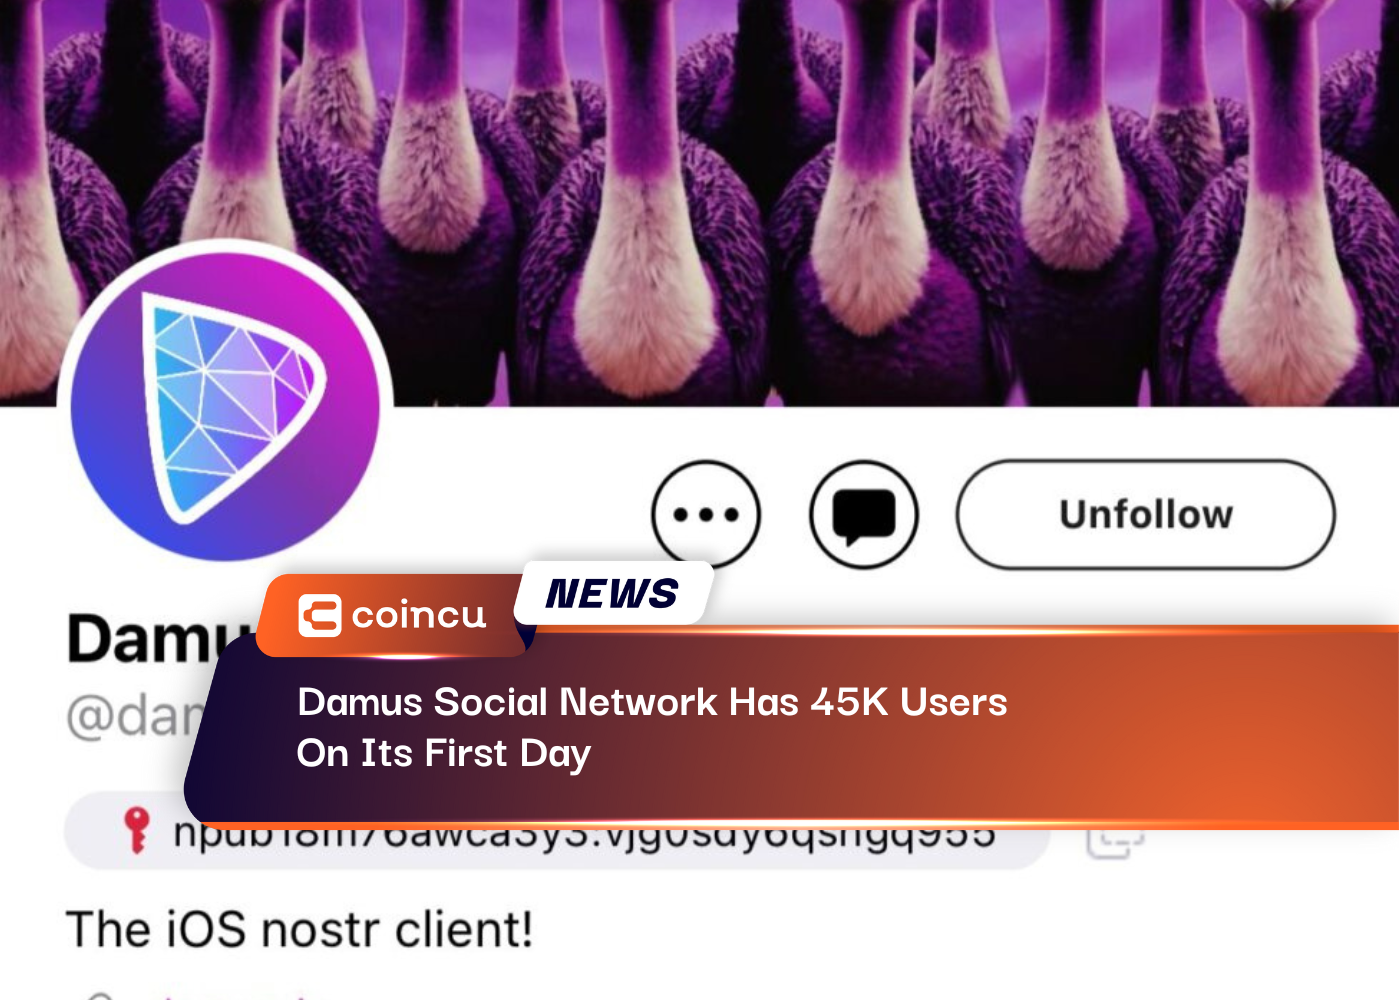 Damus Social Network Has 45K Users